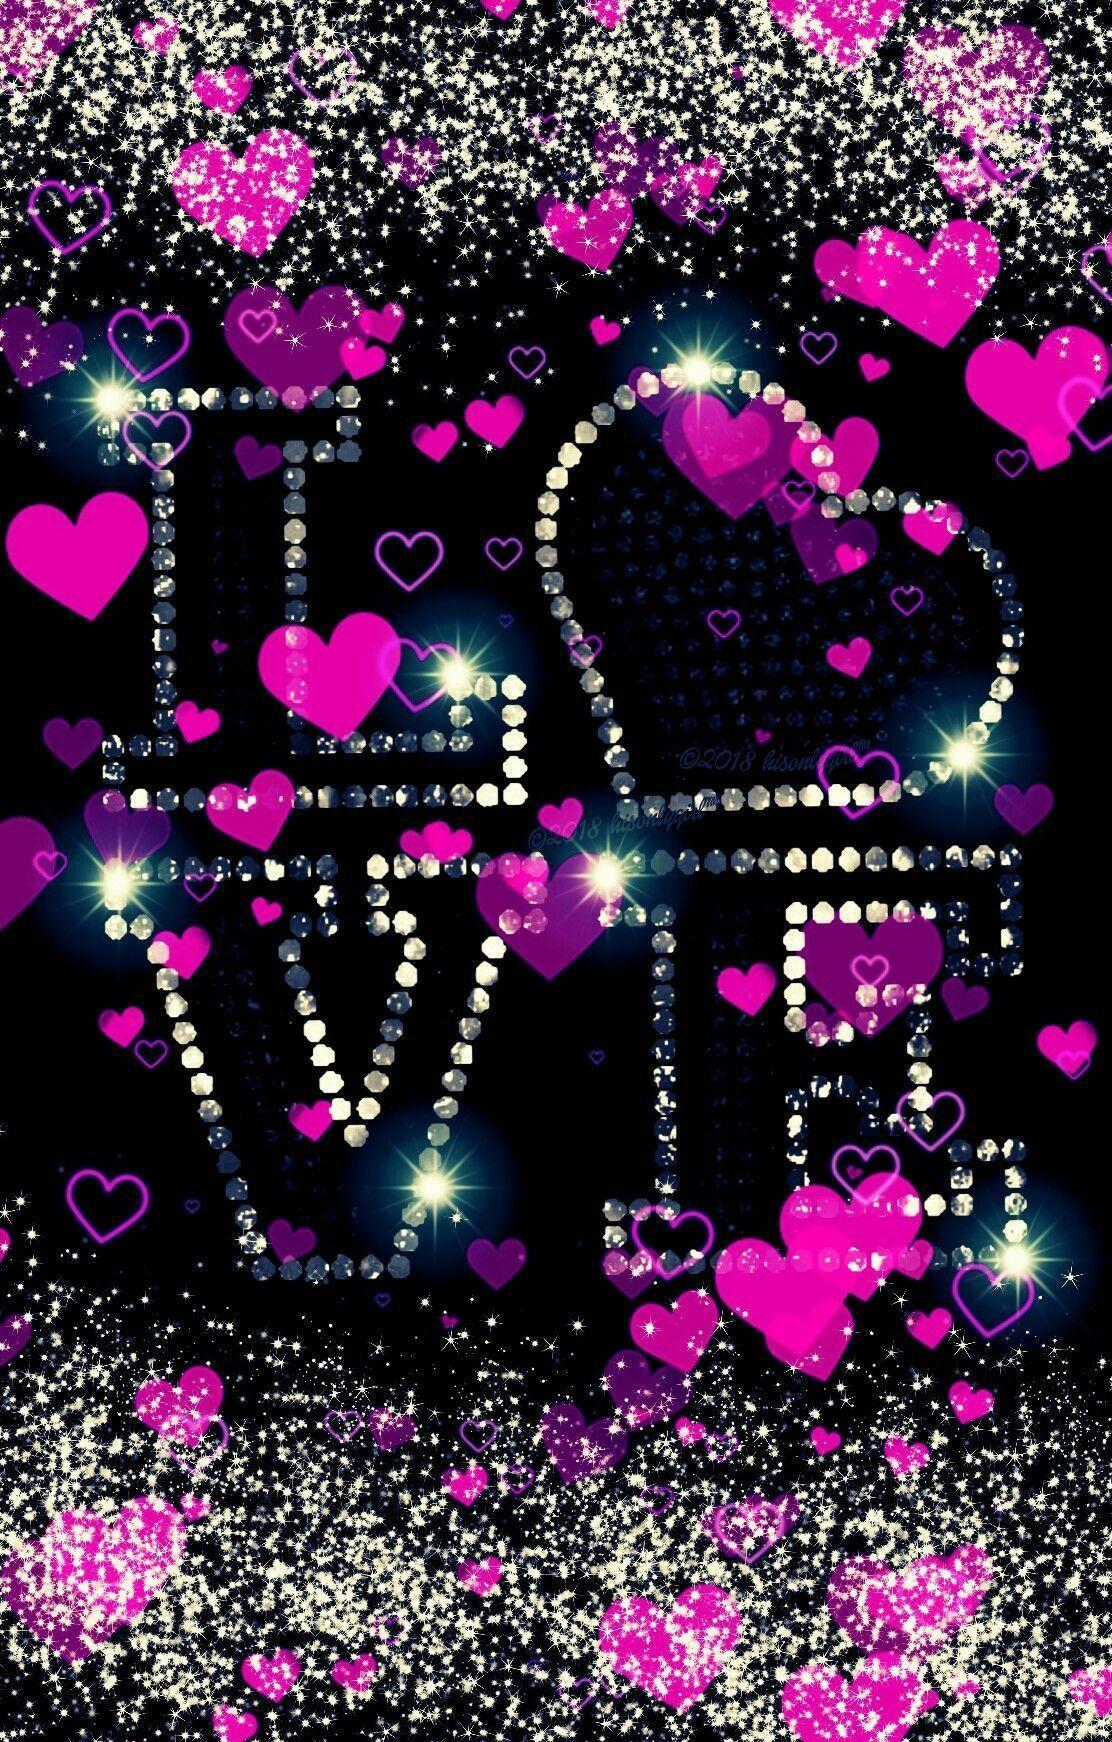 Pink hearts love glitter wallpaper I created for CocoPPa